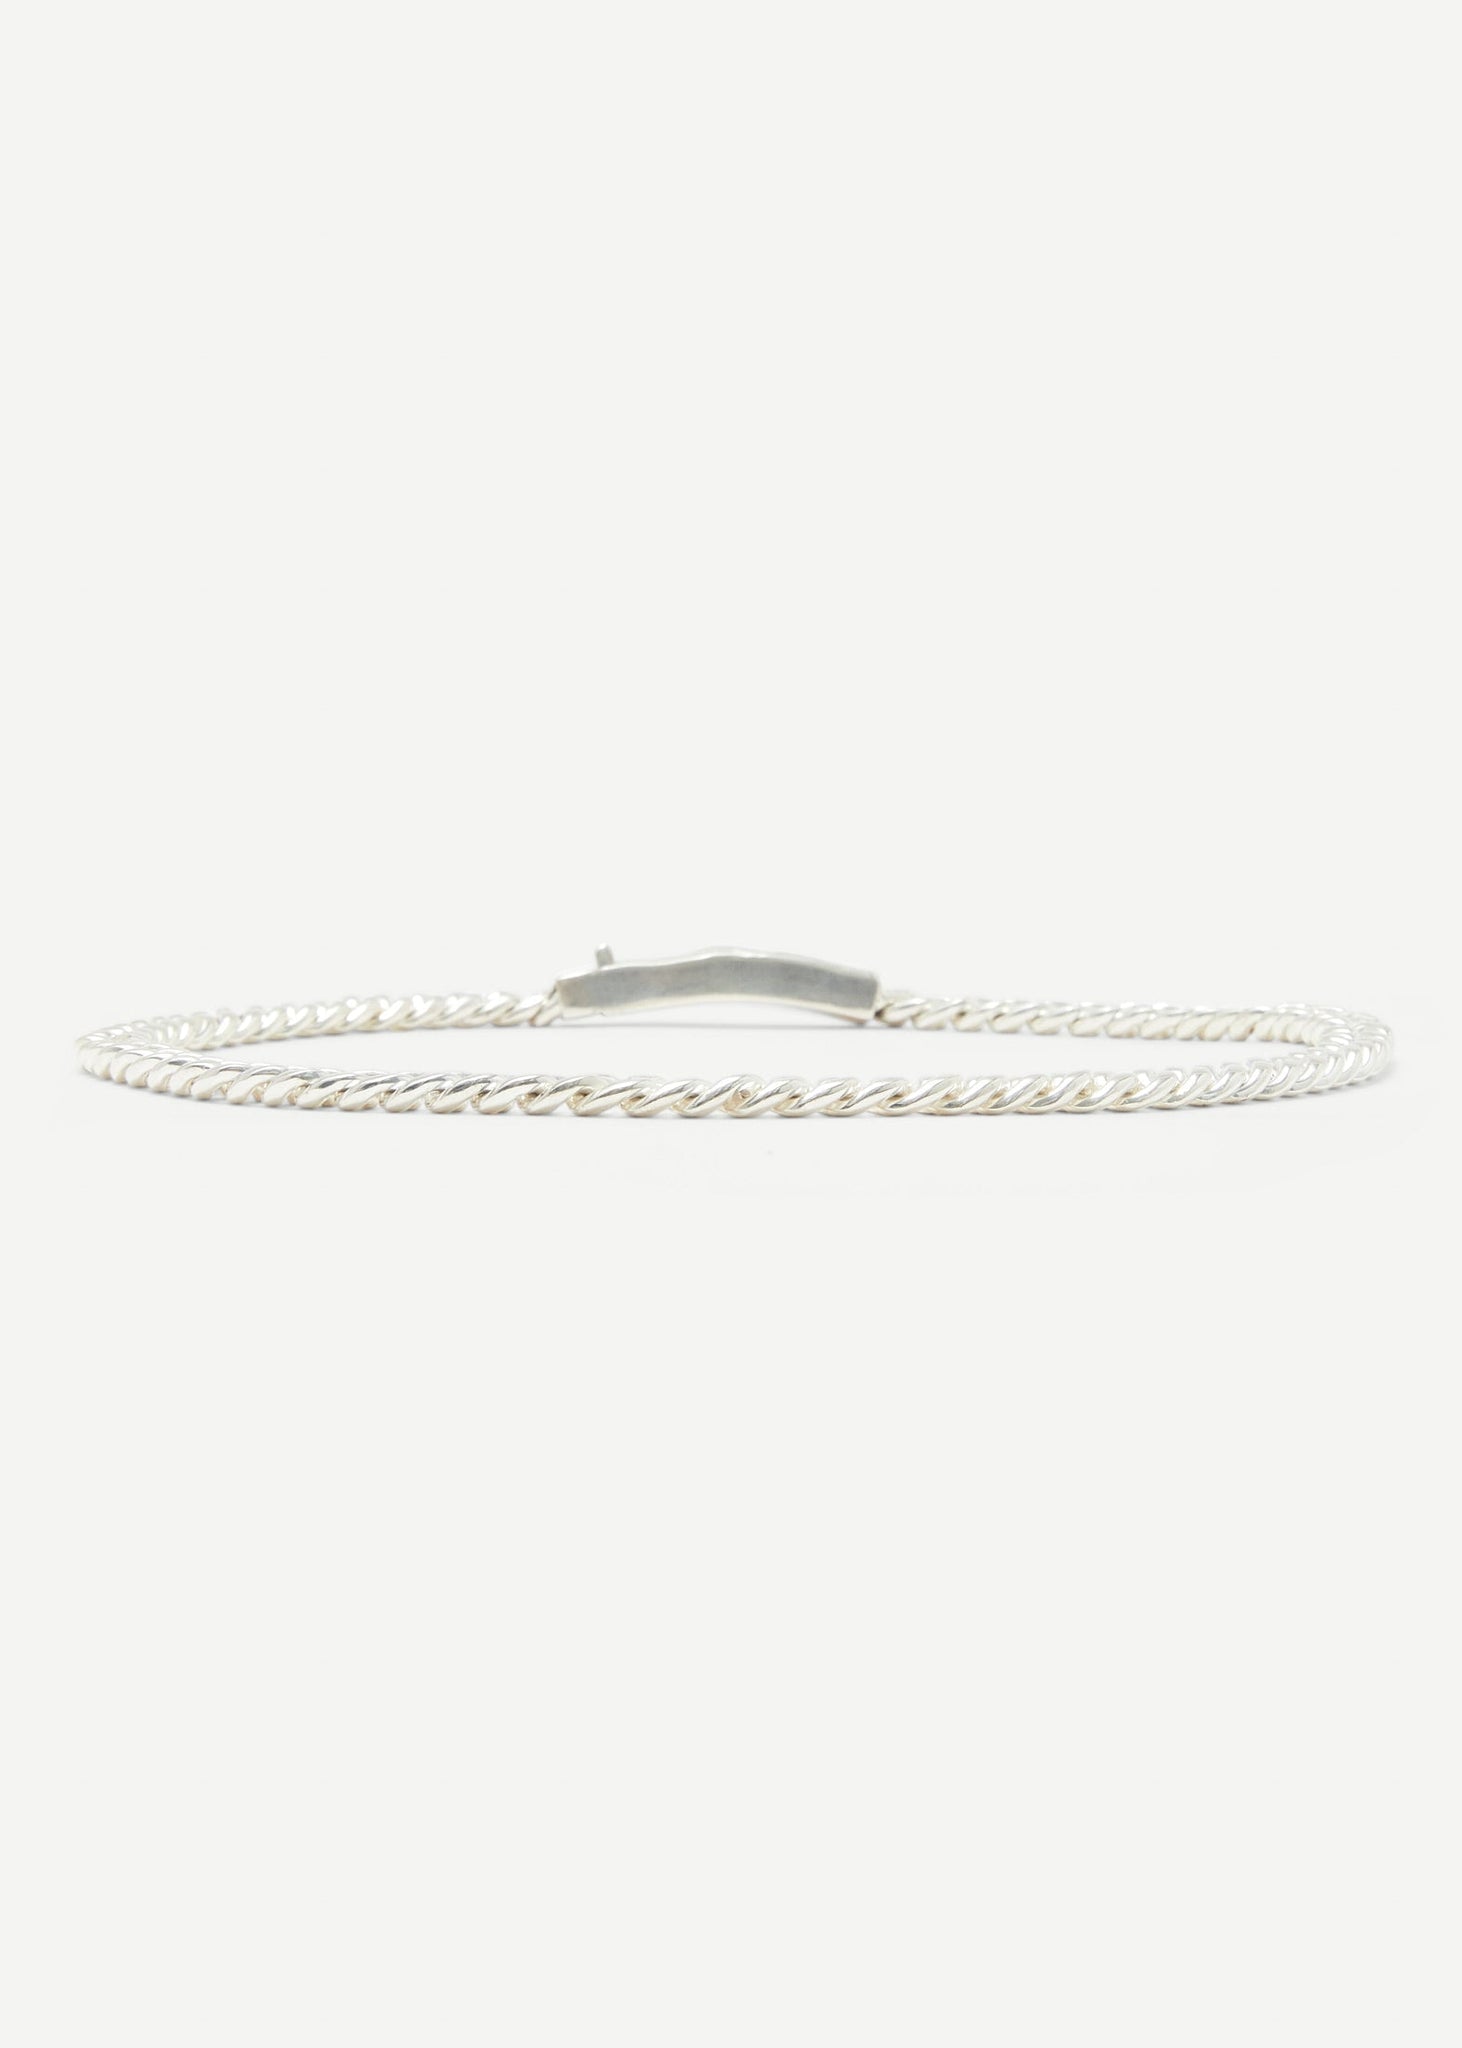 Molded Chain Necklace - Necklaces - Cornelia Webb - 3